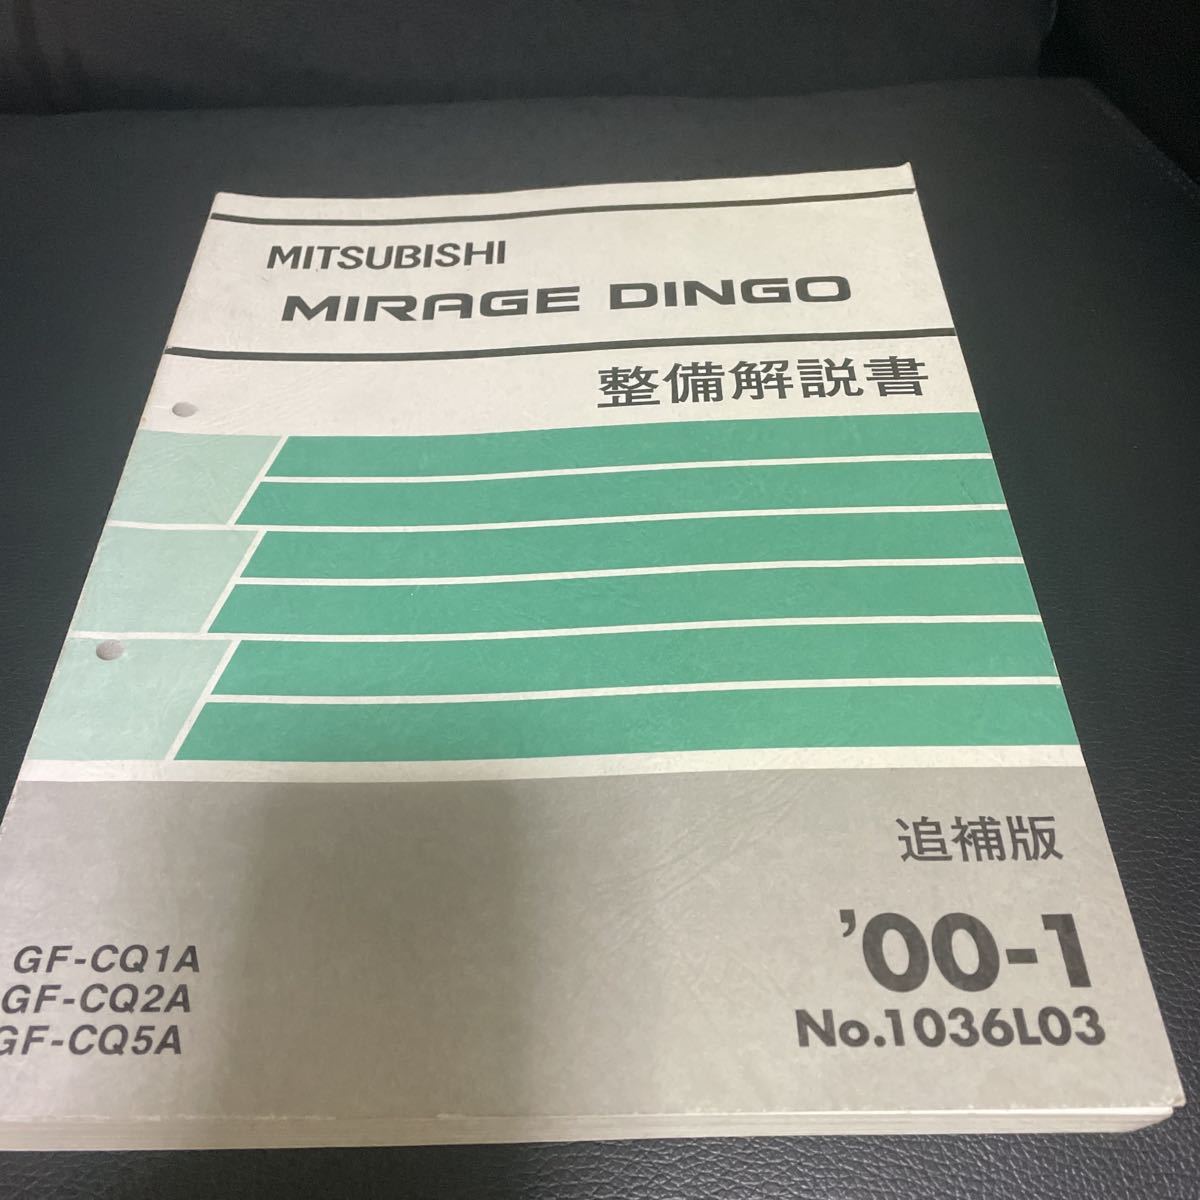 Mitsubishi Mitsubishi Motors Mirage Mirage Dingo Dingo Direction Описание Описание книги разработки 00-1 Дополнительное издание